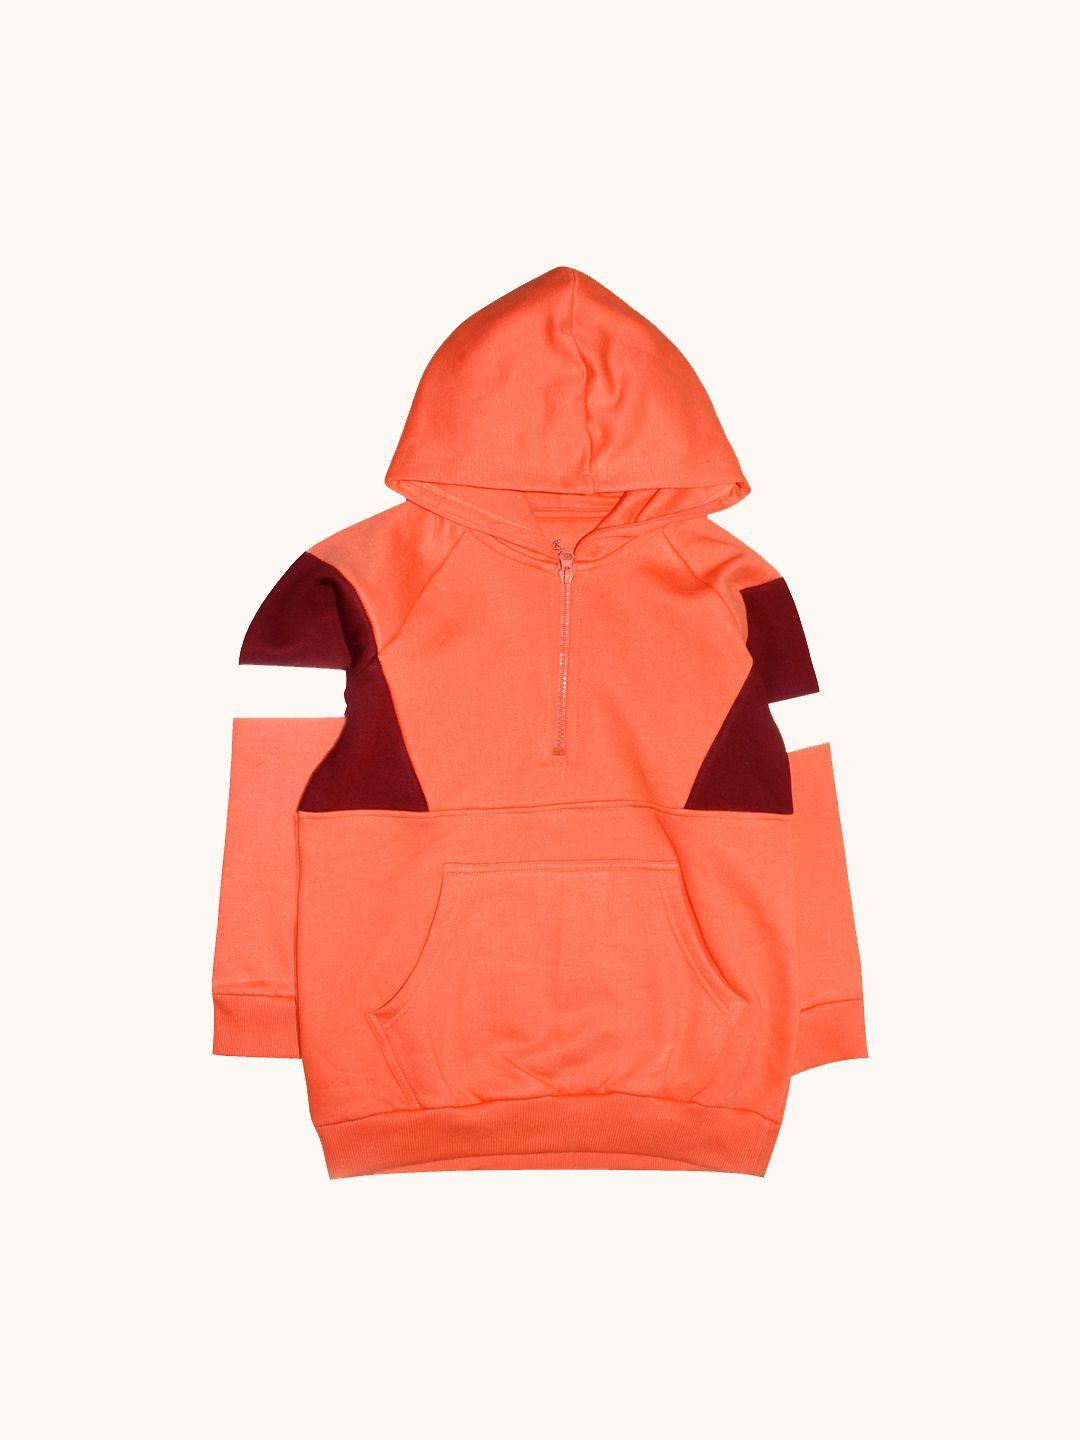 kiddopanti unisex kids coral hooded sweatshirt